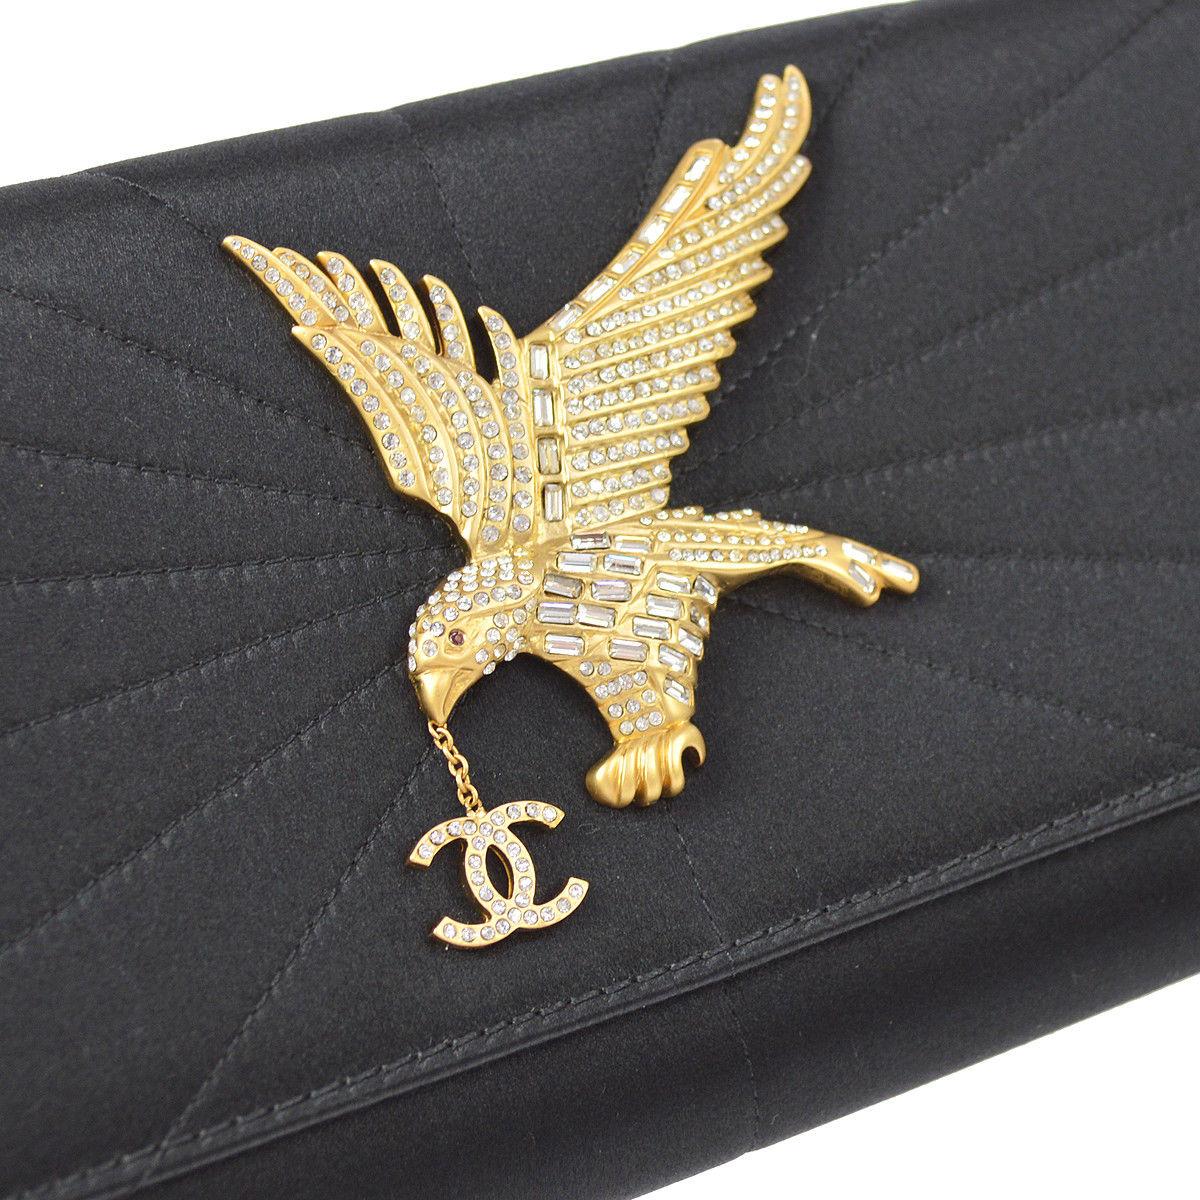 Chanel Black Satin Gold Rhinestone Bird Charm Evening Clutch Shoulder Flap Bag in Box

Satin
Rhinestone
Leather lining
Magnetic closure
Made in Italy
Shoulder strap drop 8.75